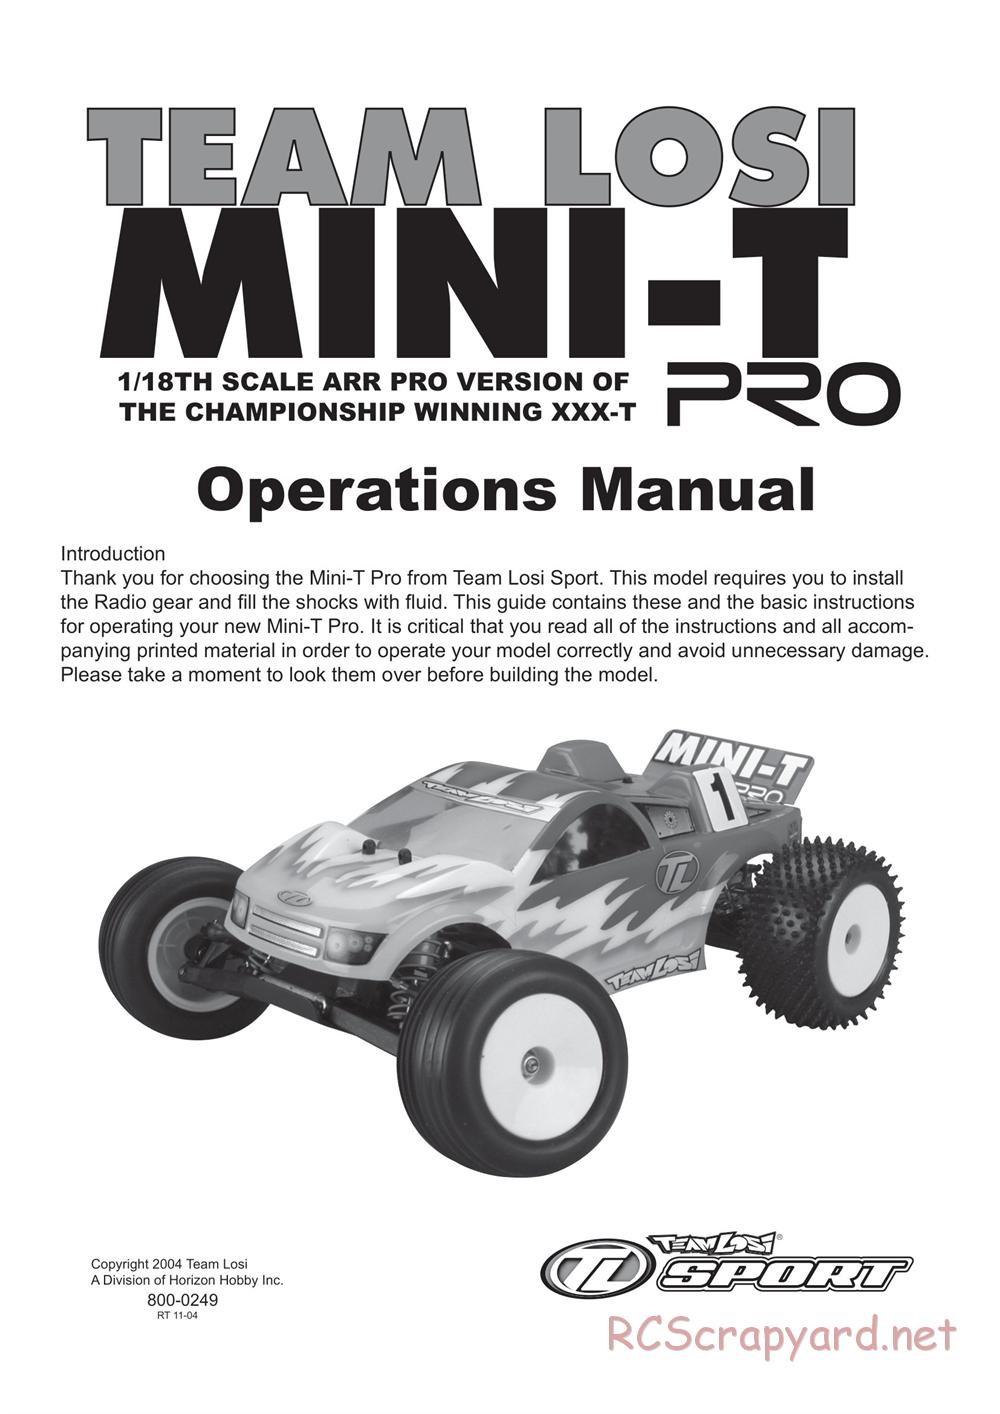 Team Losi - Mini-T Pro - Manual - Page 1